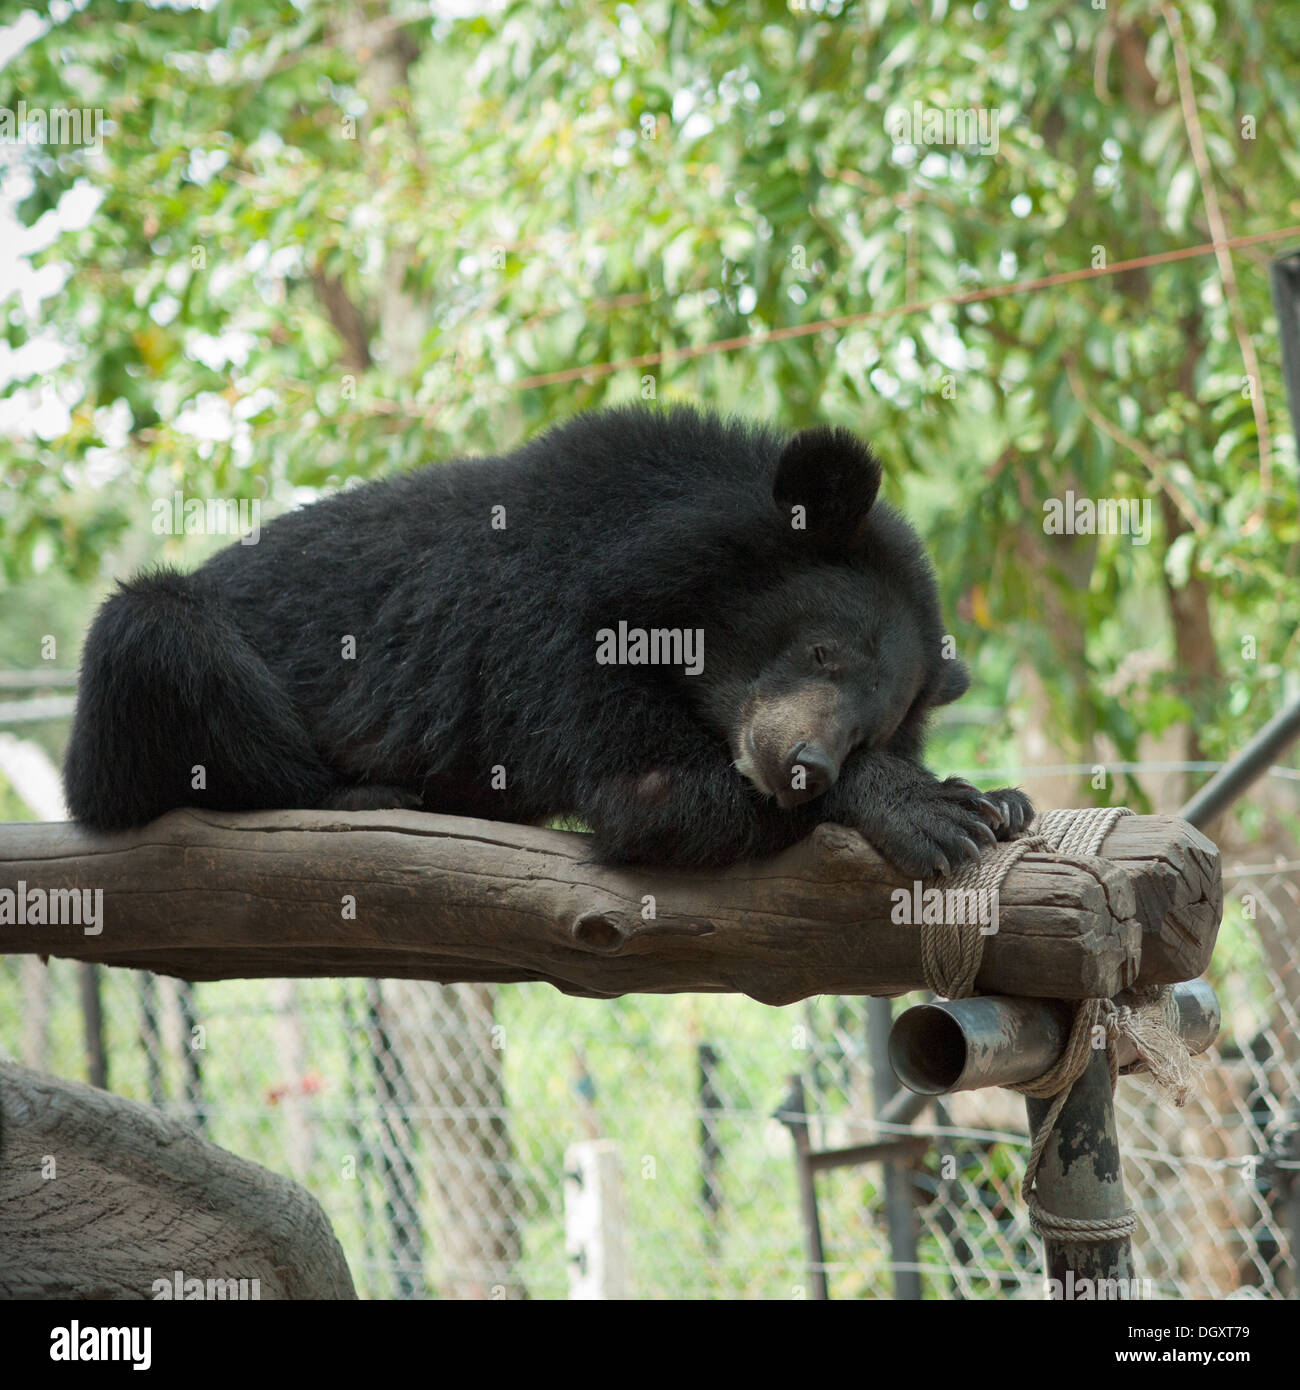 An Asiatic black bear (Ursus thibetanus), a.k.a. a moon bear, at the Phnom Tamao Wildlife Rescue Center in Phnom Tamao, Cambodia Stock Photo